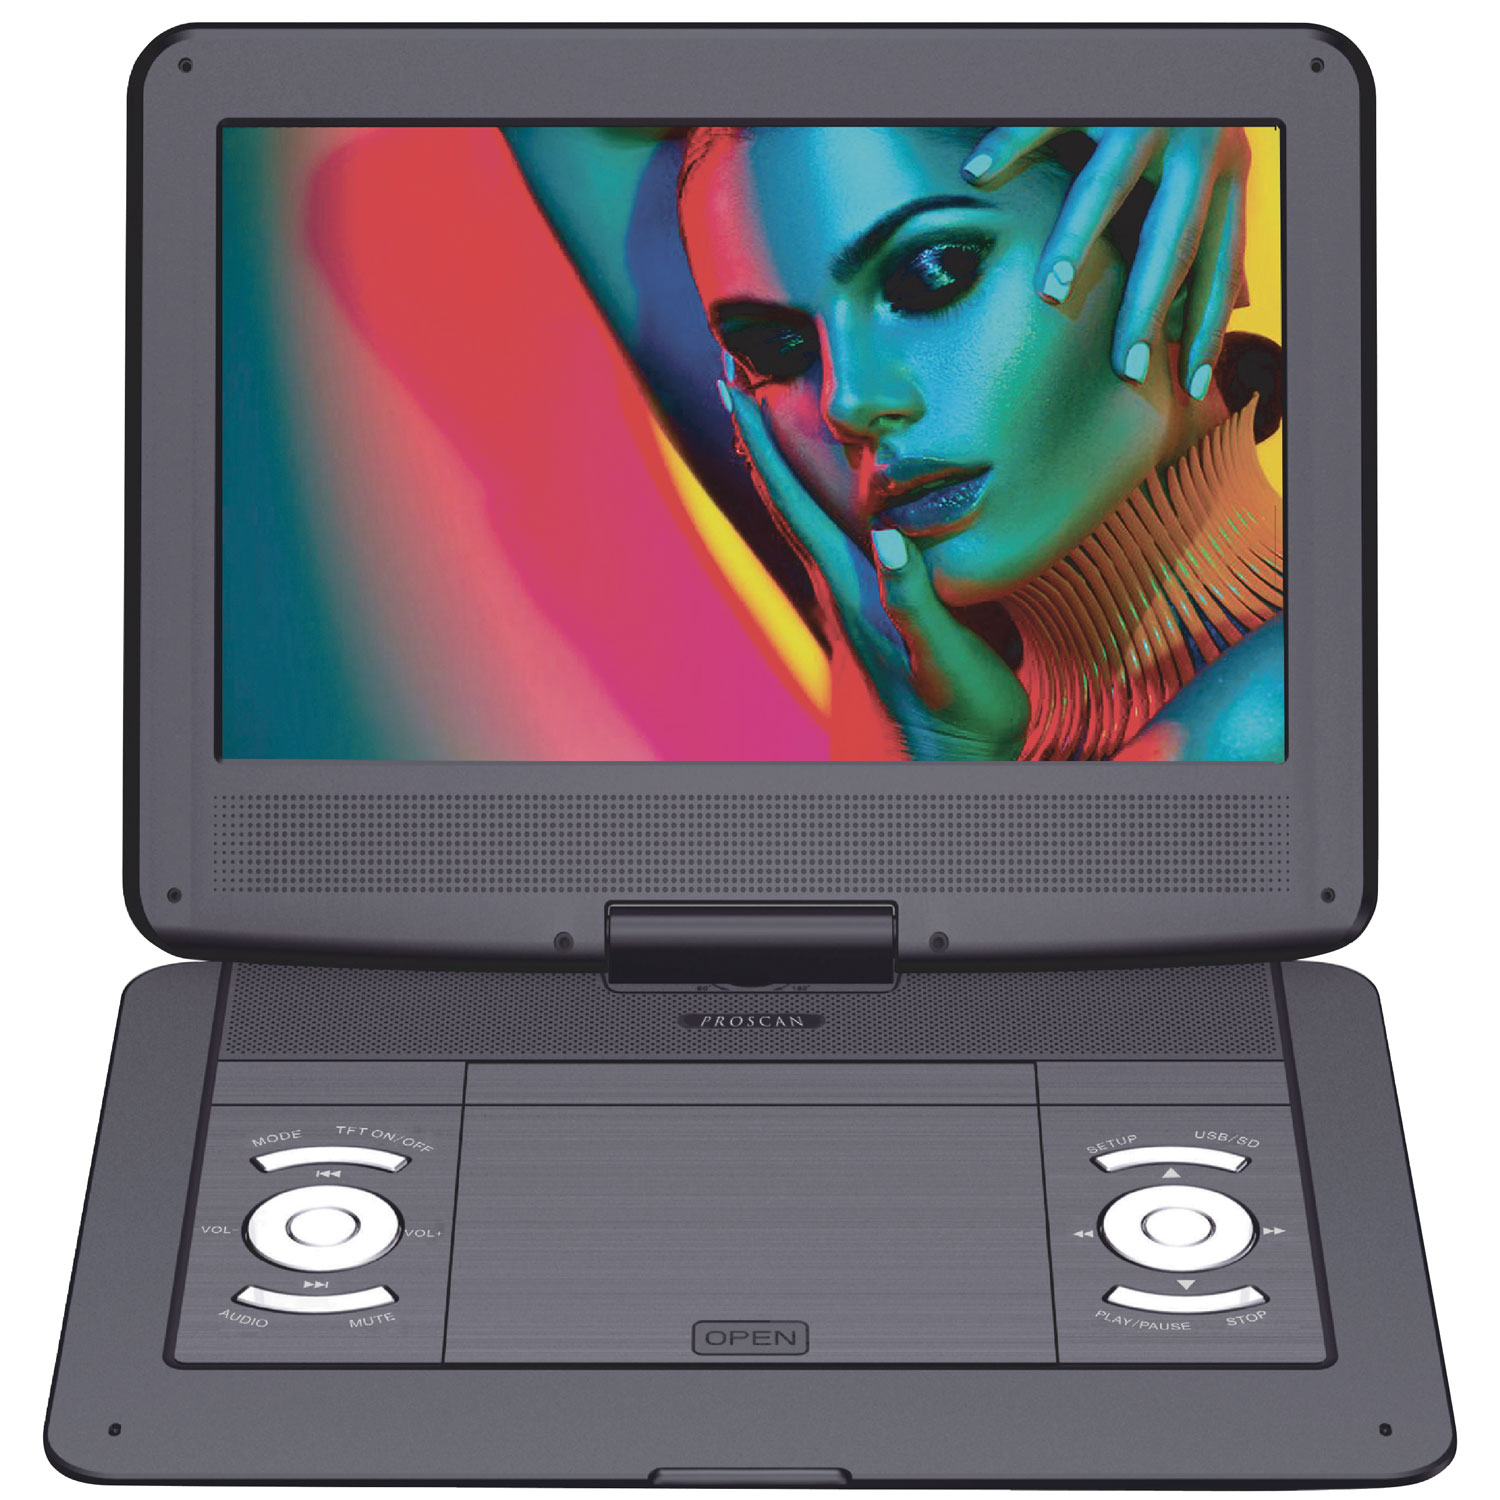 Proscan 13.3" Portable DVD Player